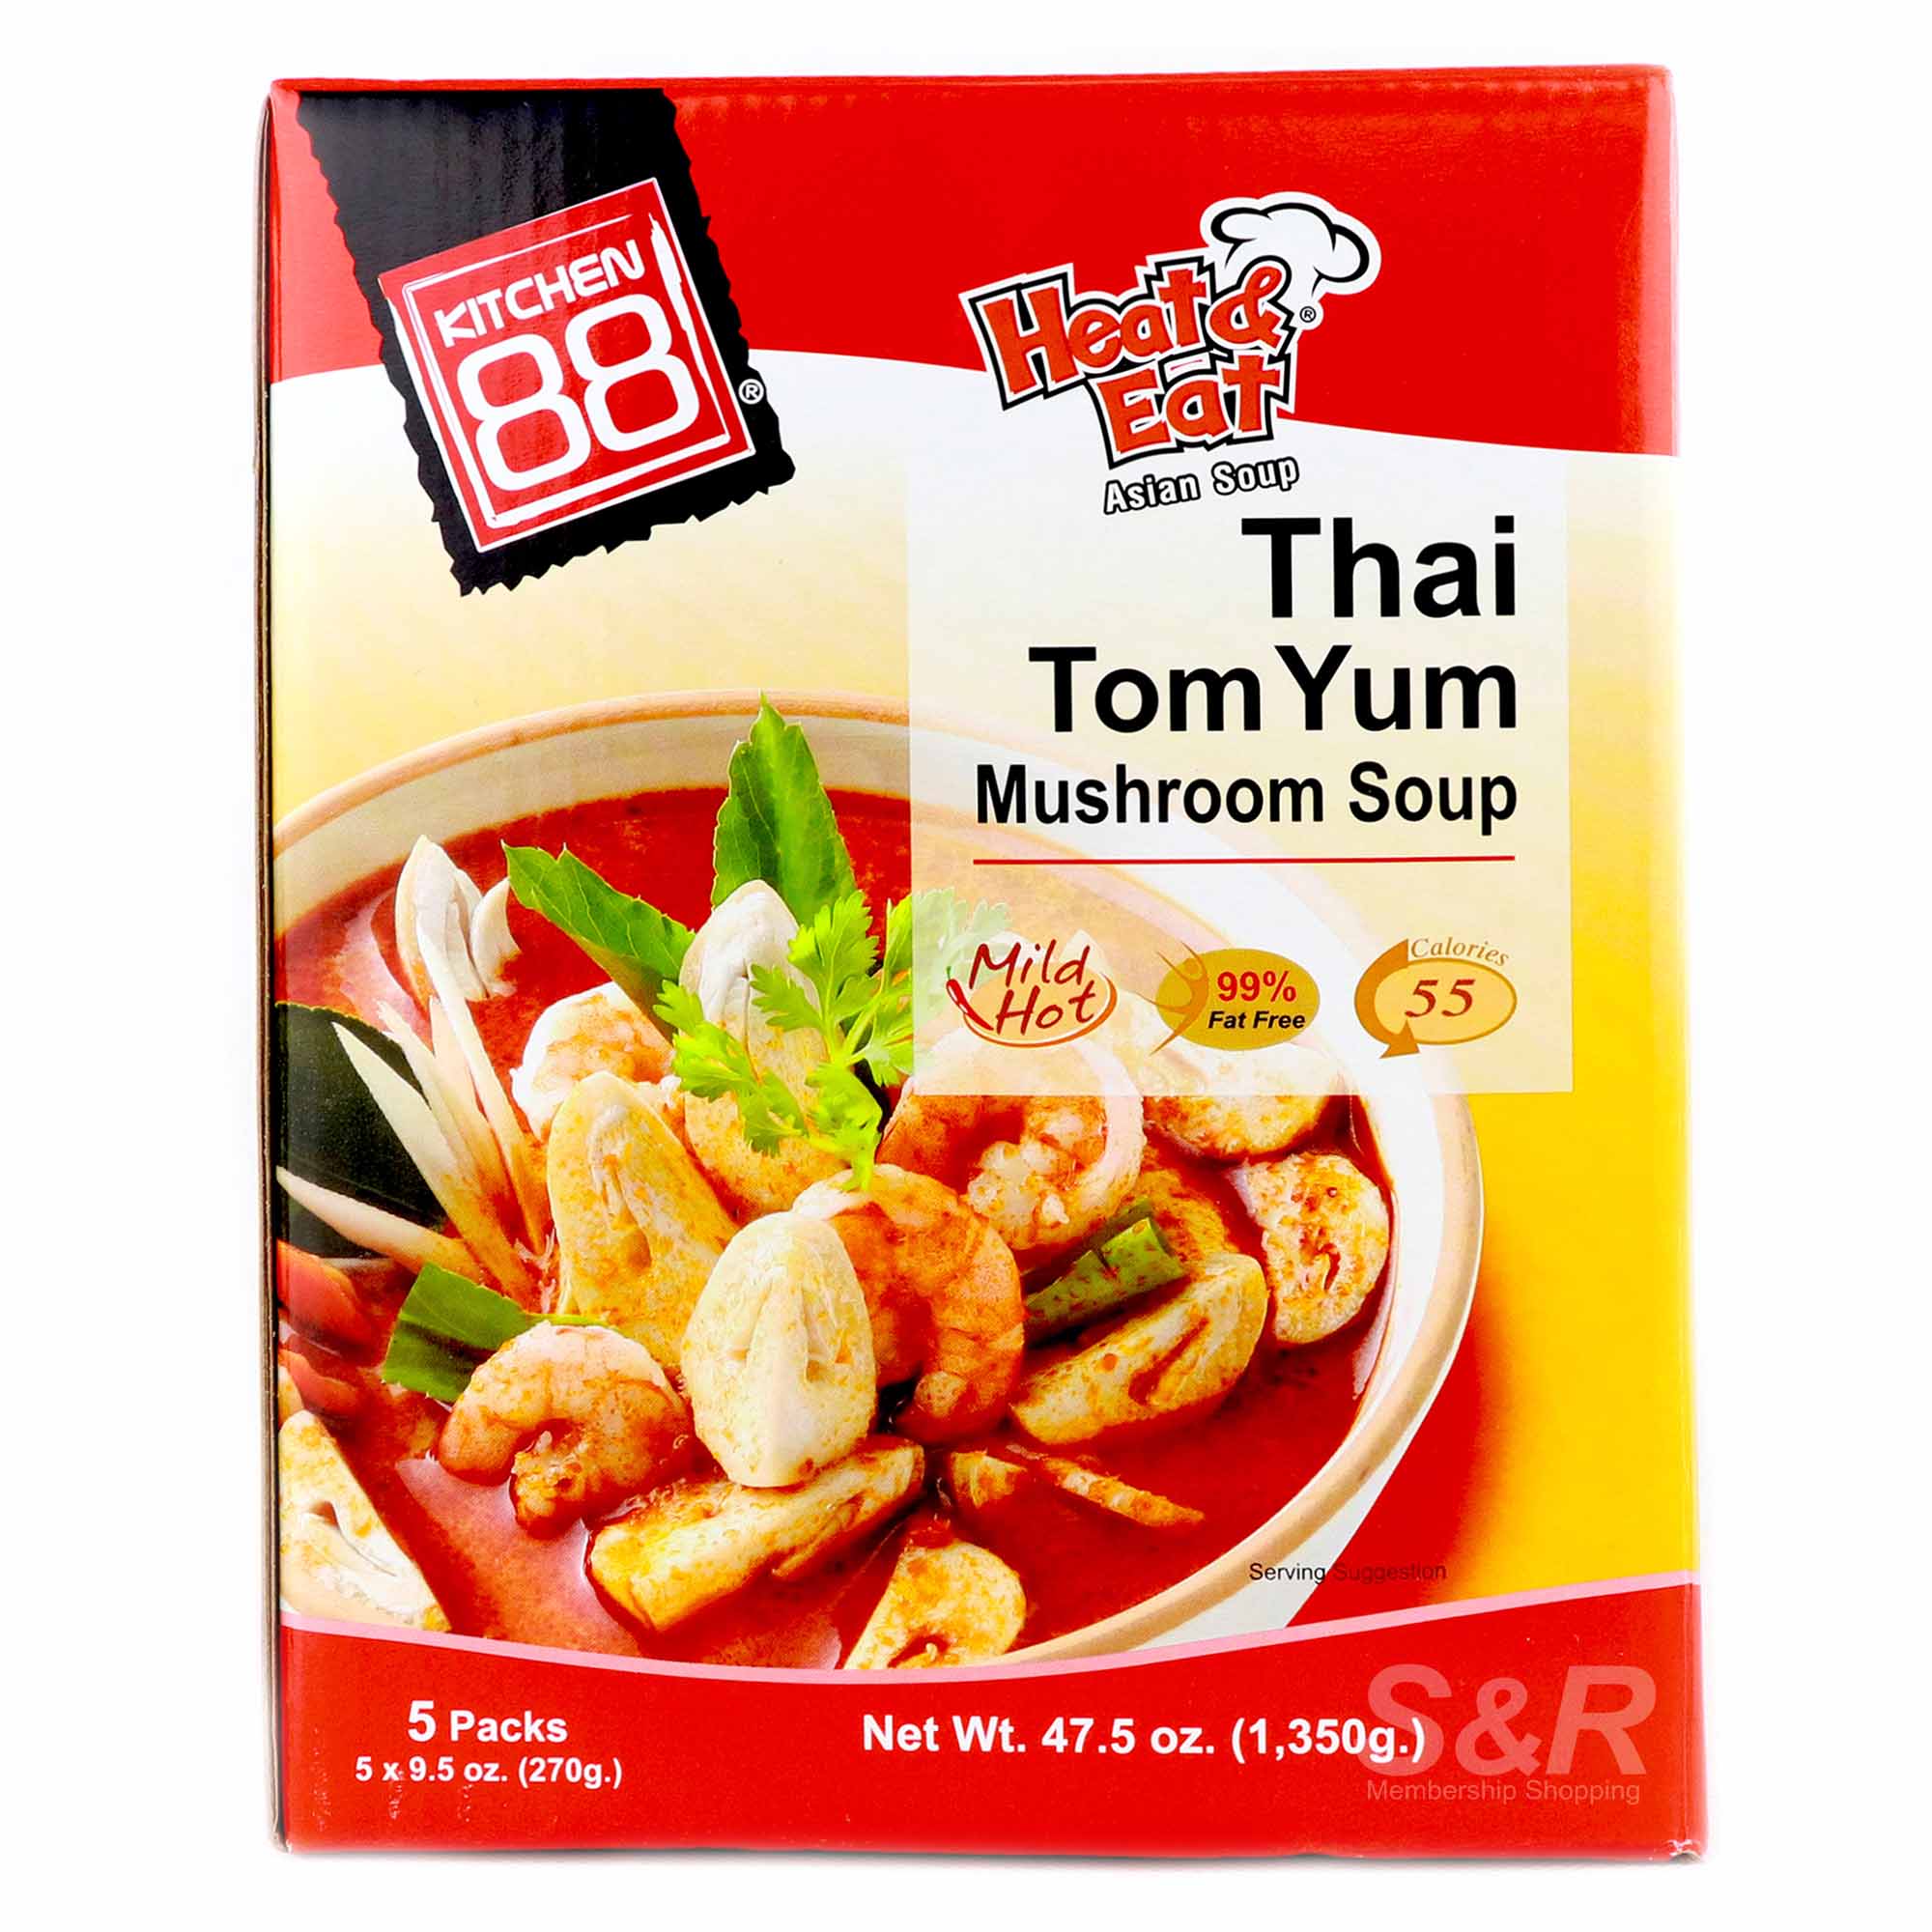 Kitchen 88 Thai Tom Yum Mushroom Soup 5pcs